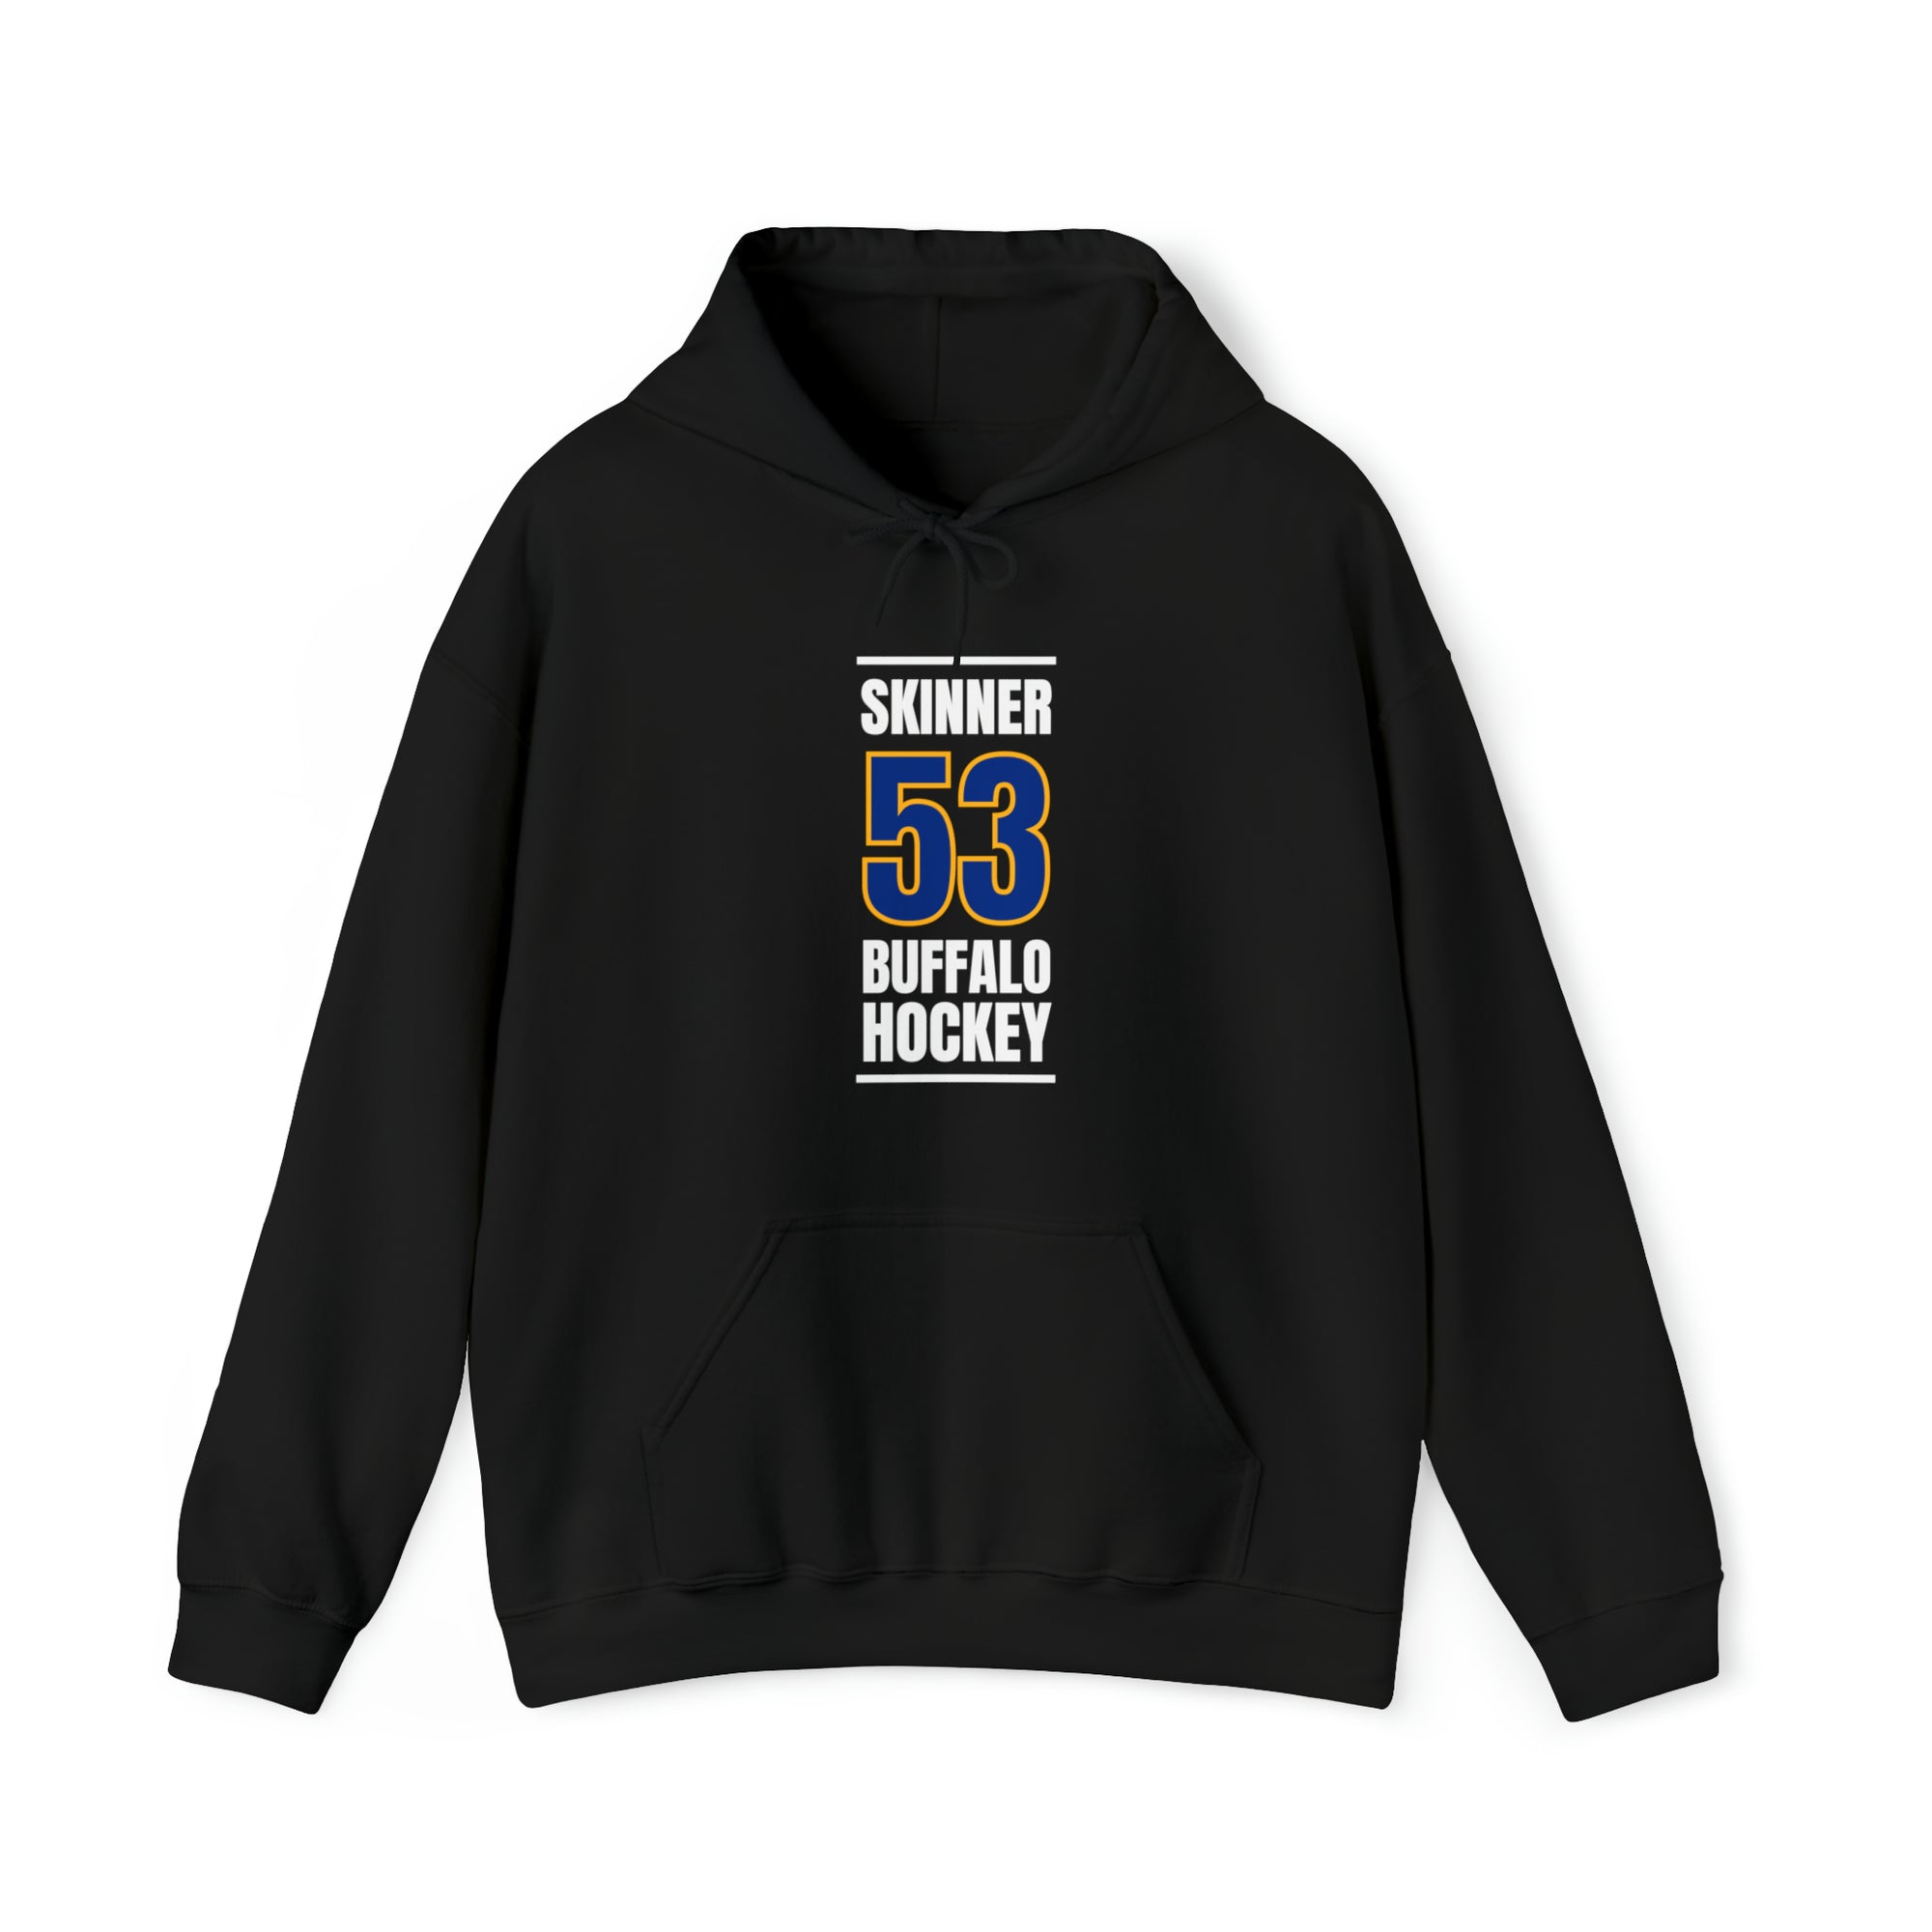 Skinner 53 Buffalo Hockey Royal Blue Vertical Design Unisex Hooded Sweatshirt